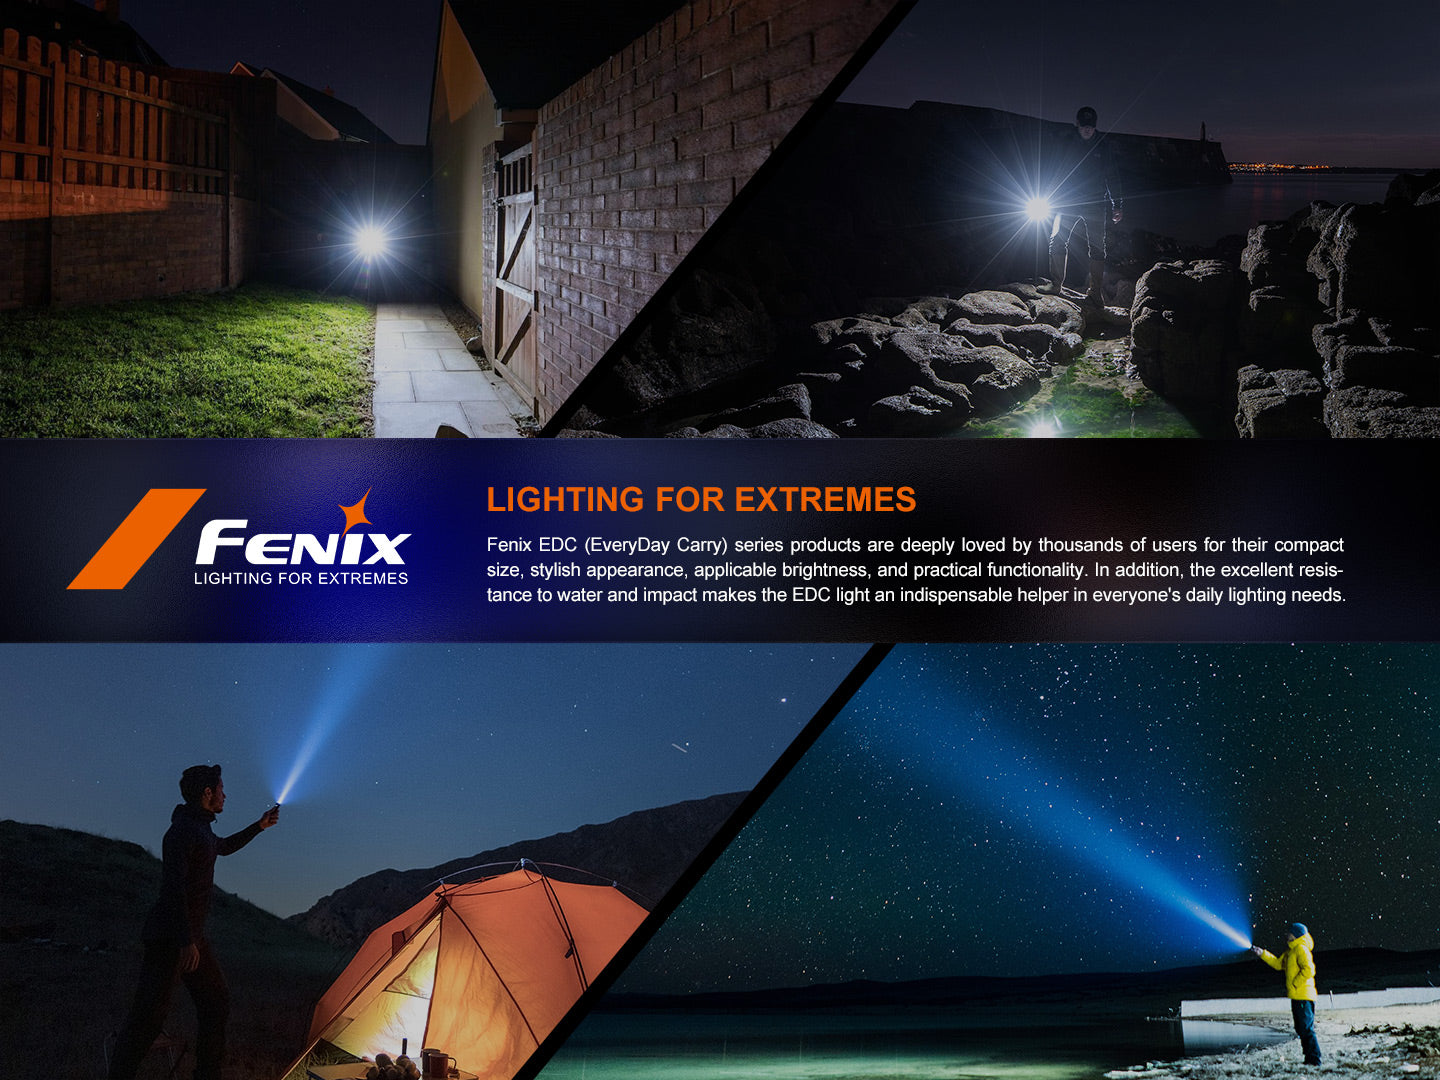 Fenix E18R V2 Ultra Compact High Performance EDC Flashlight